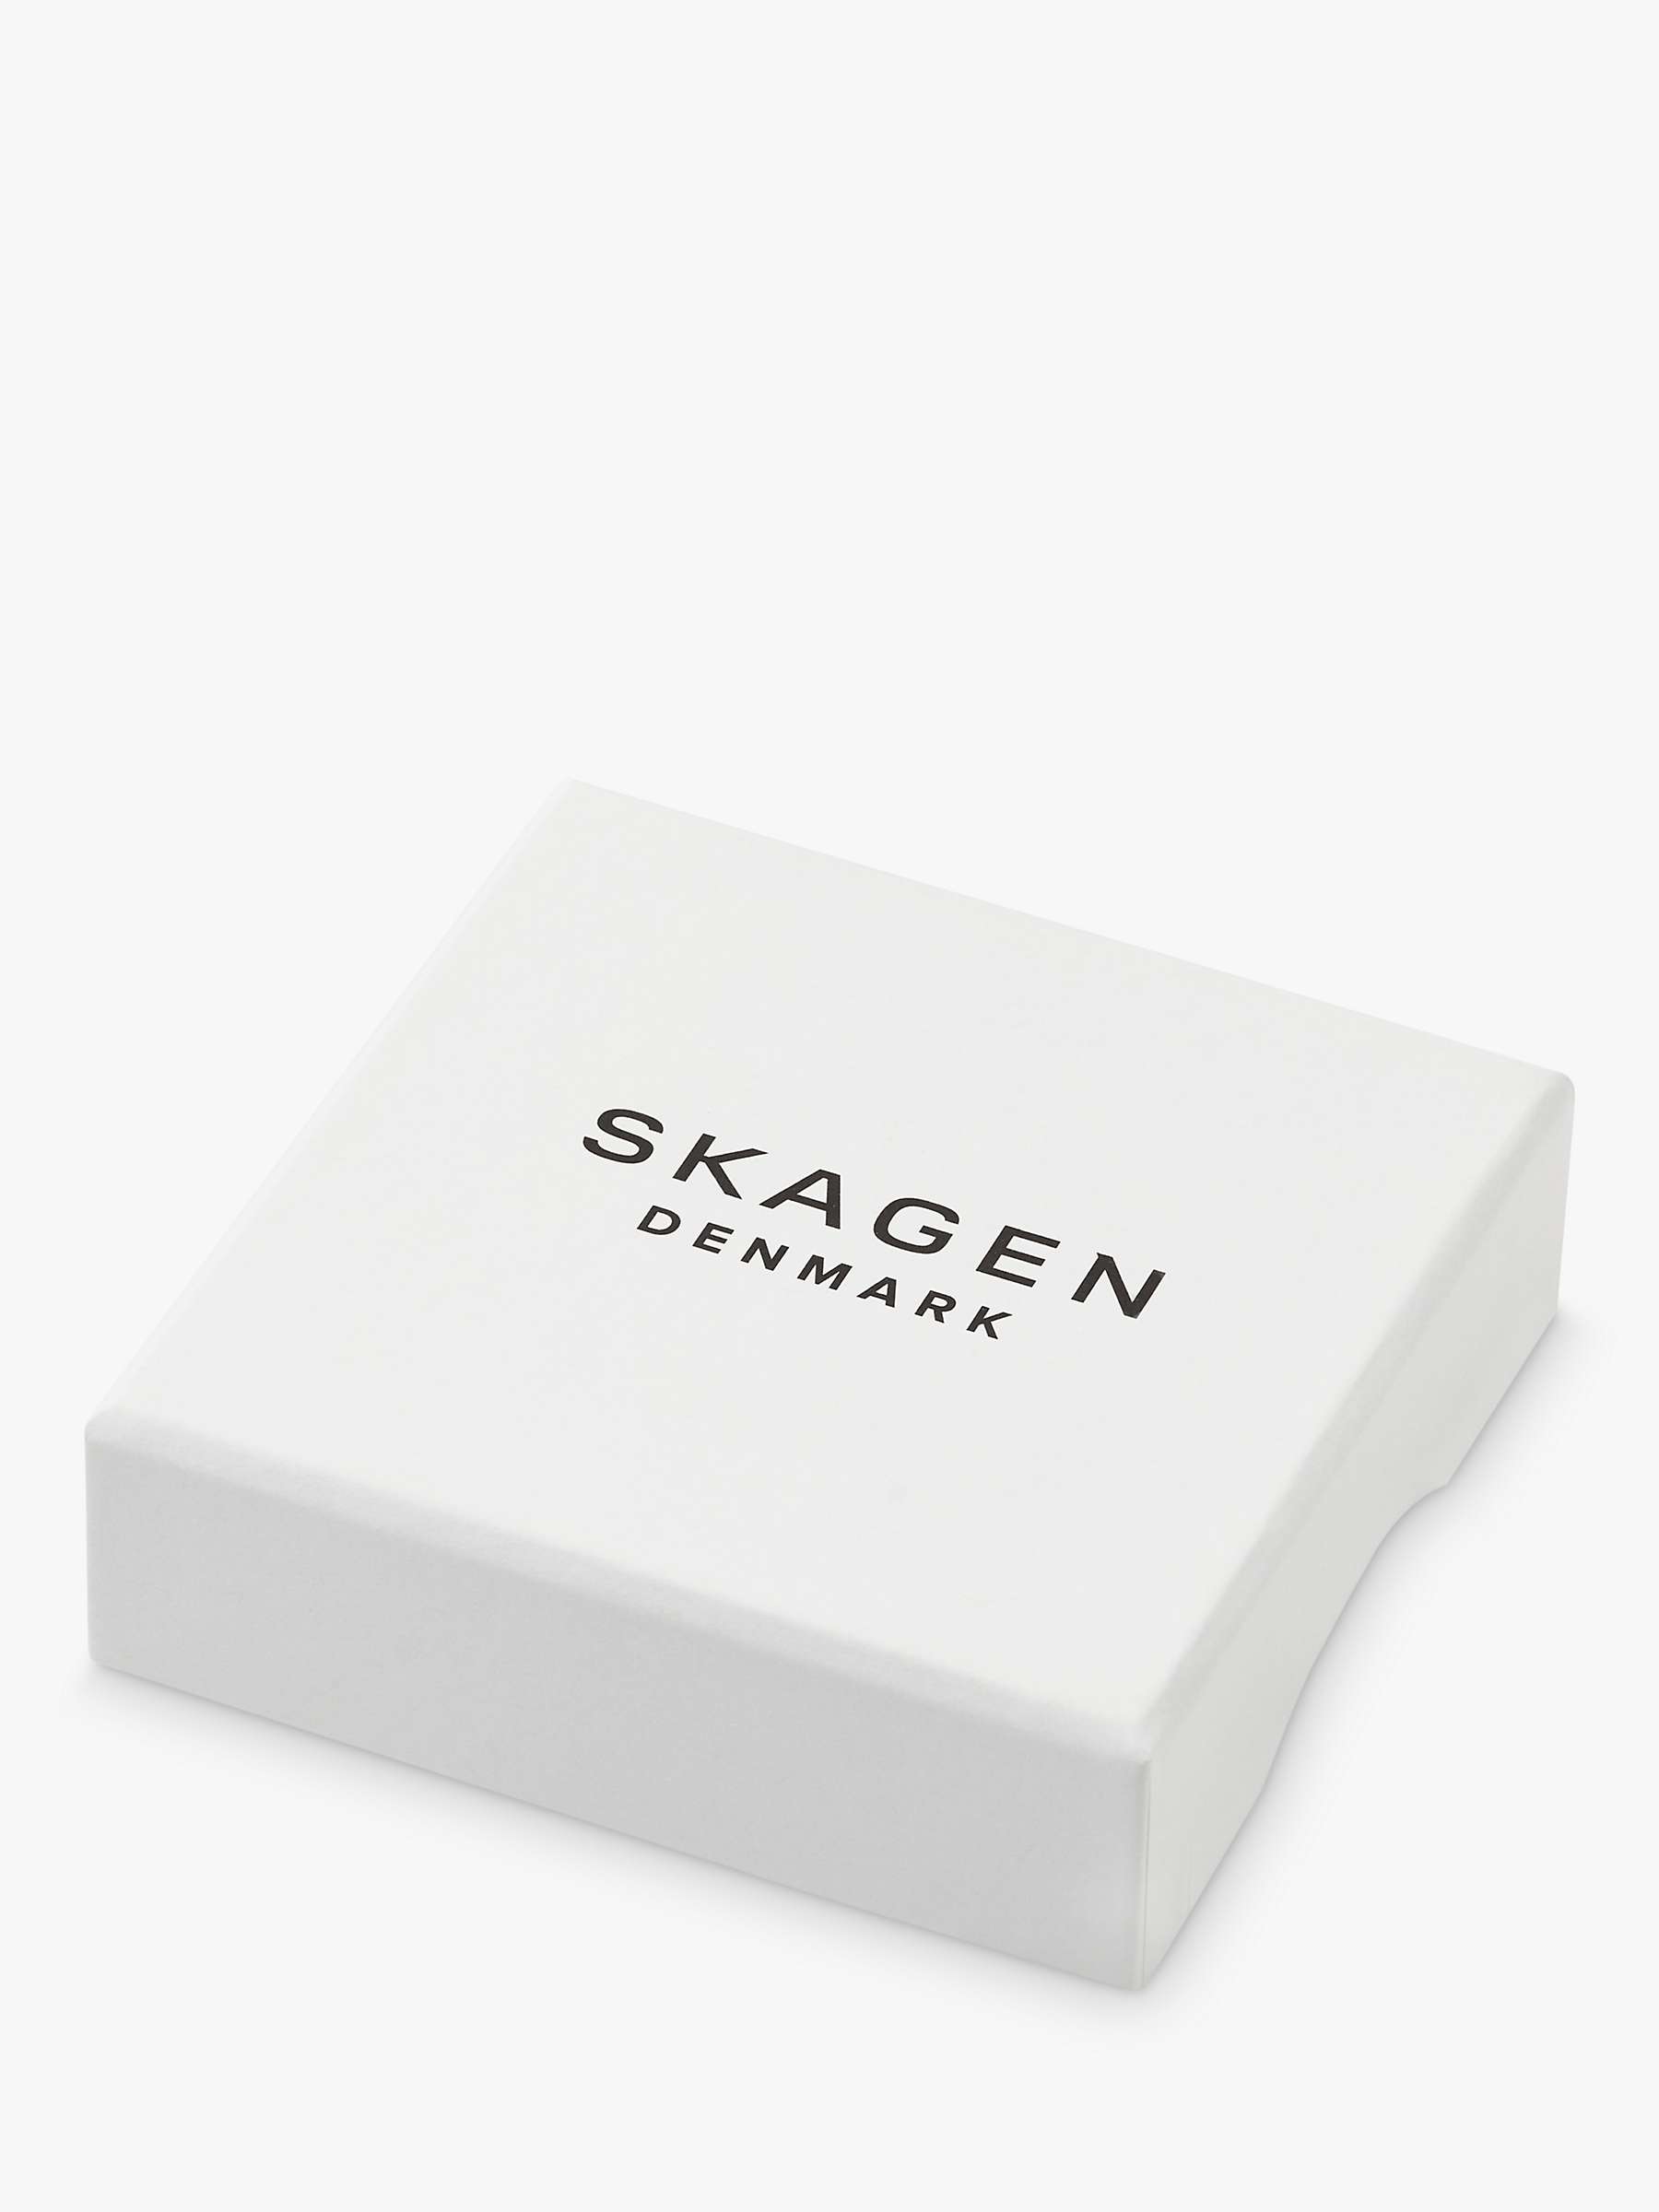 Buy Skagen Linear Hoop Earrings, Gold/Silver Online at johnlewis.com